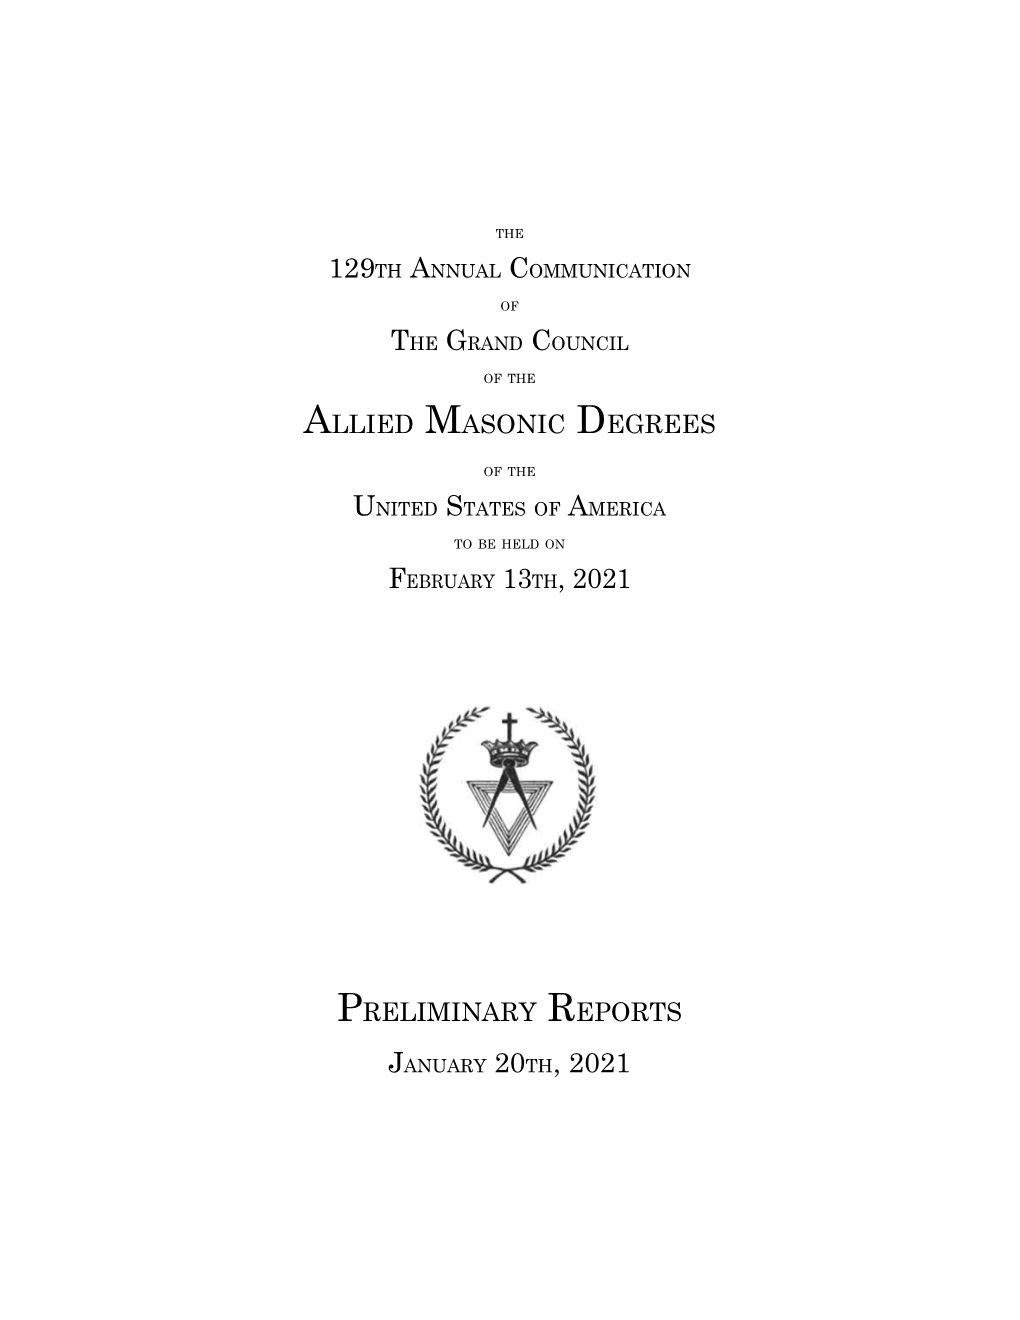 Allied Masonic Degrees Preliminary Reports